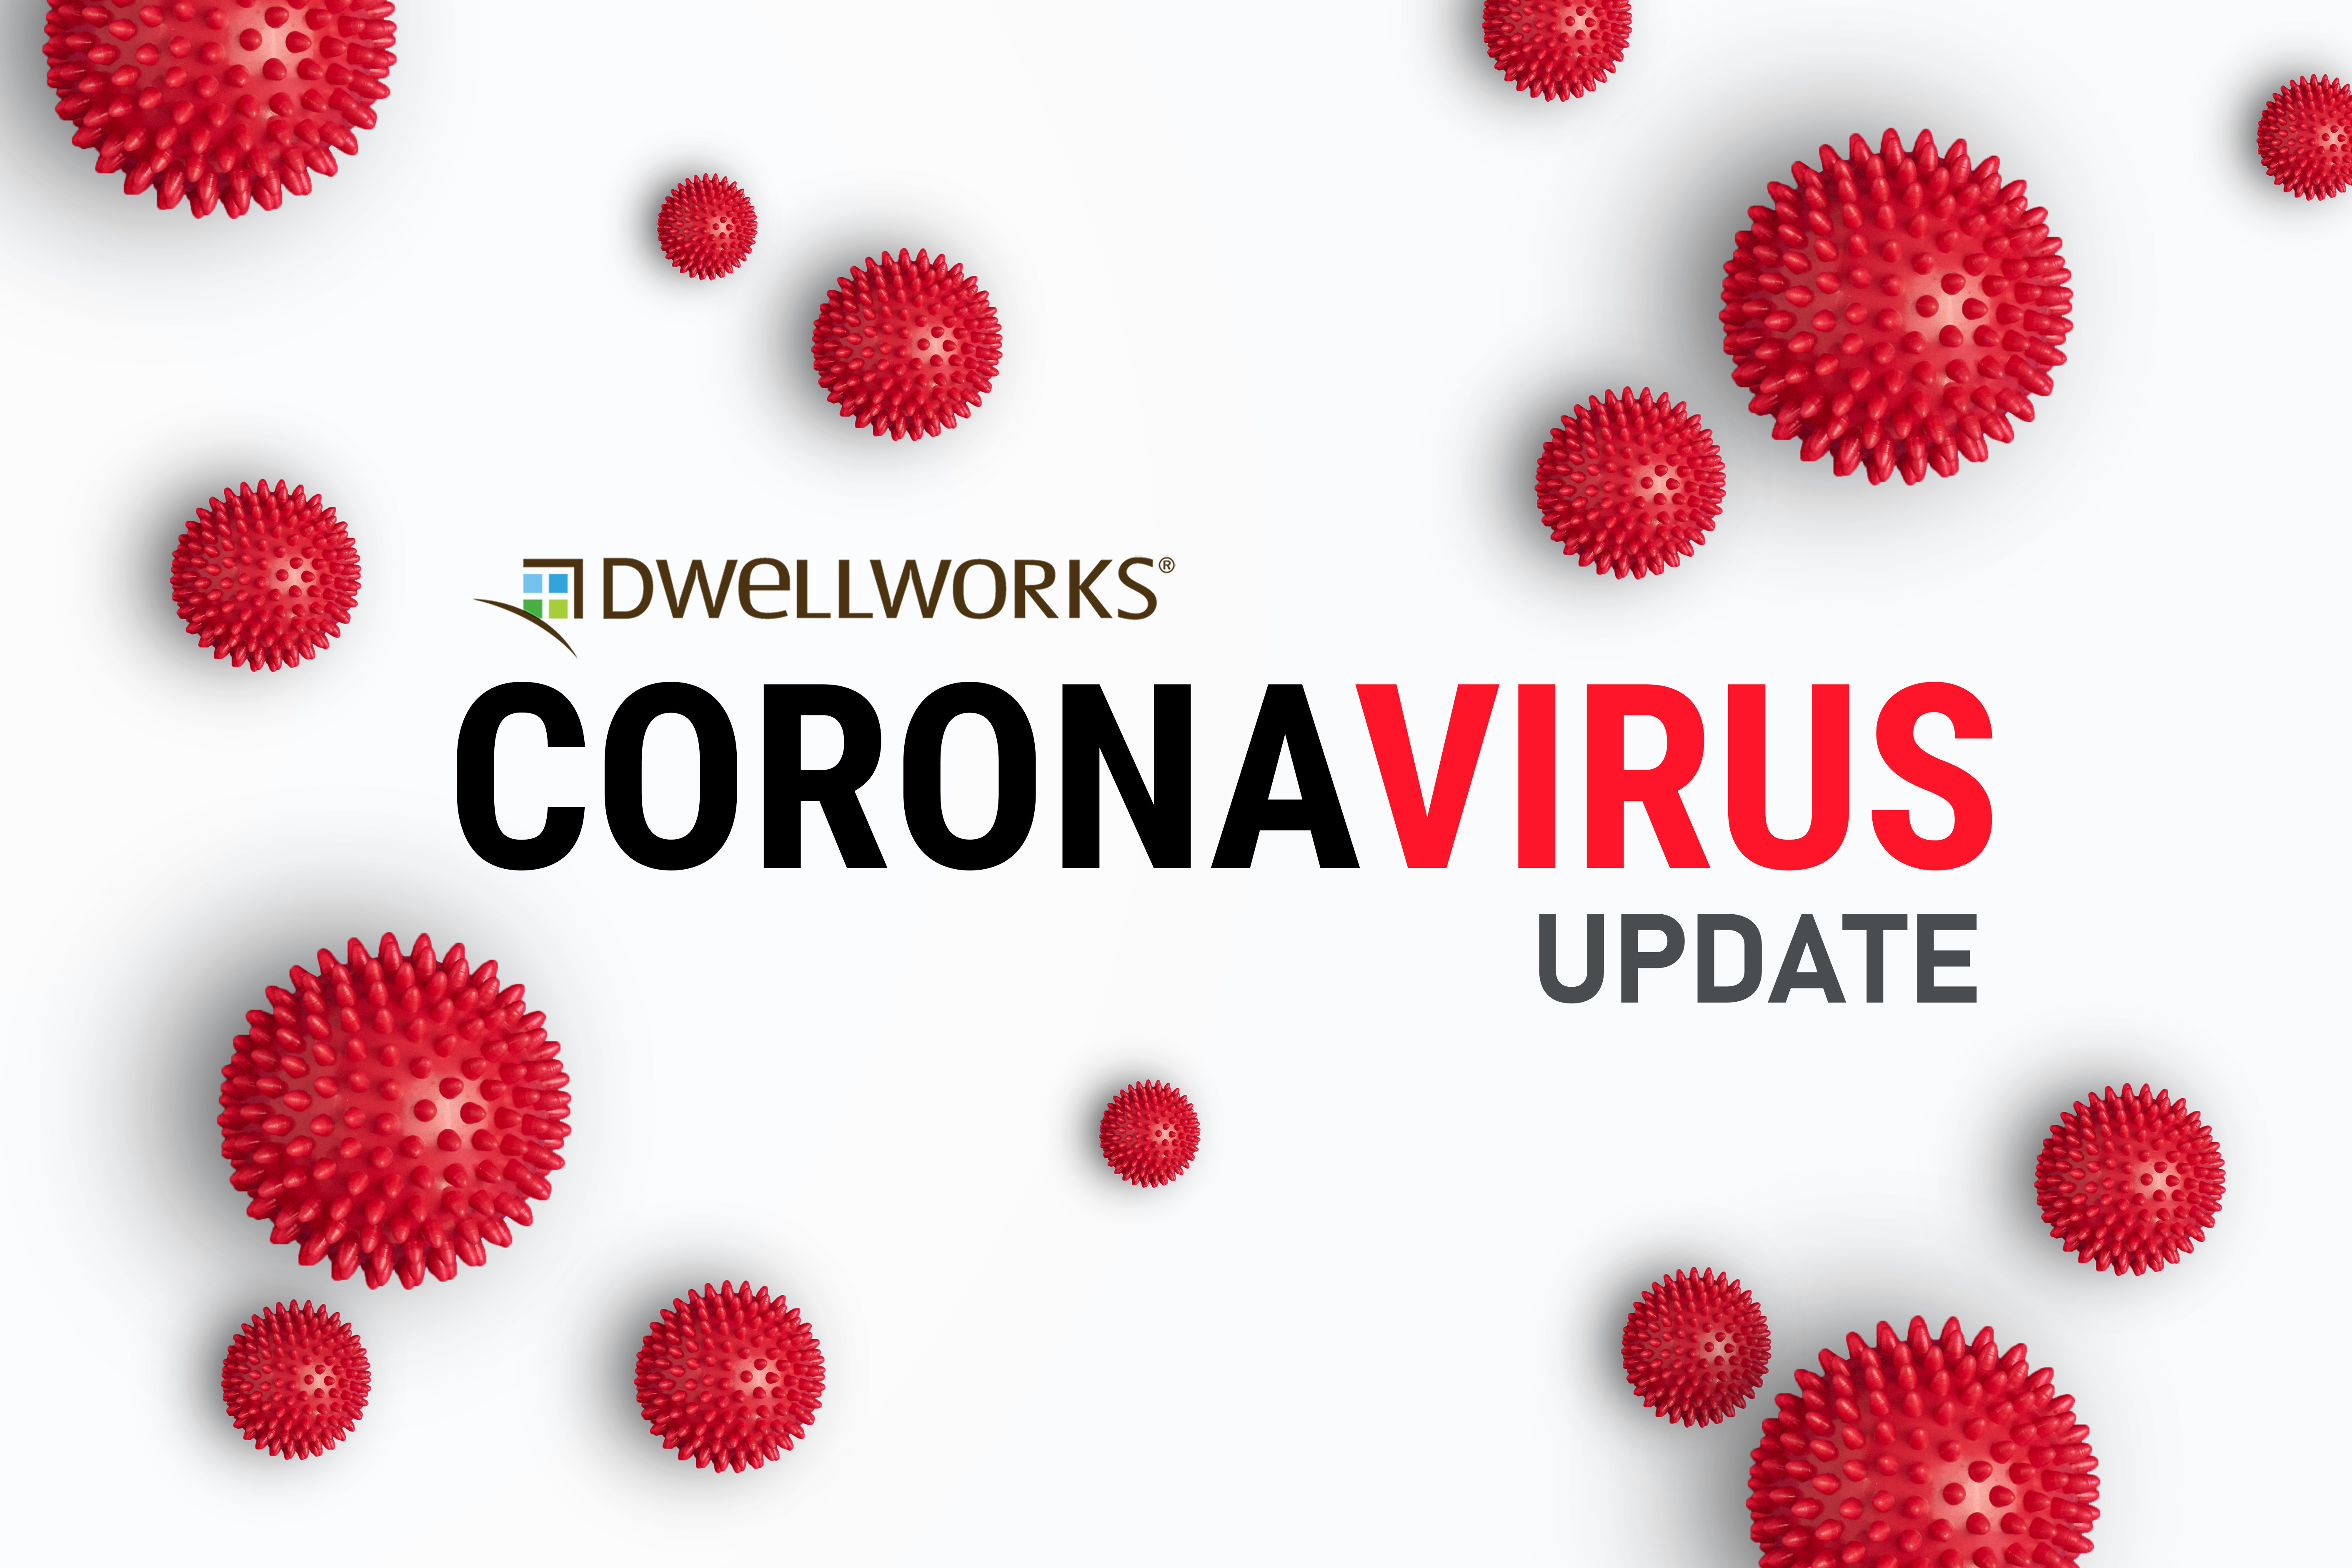  dwellworks coronavirus update march 19